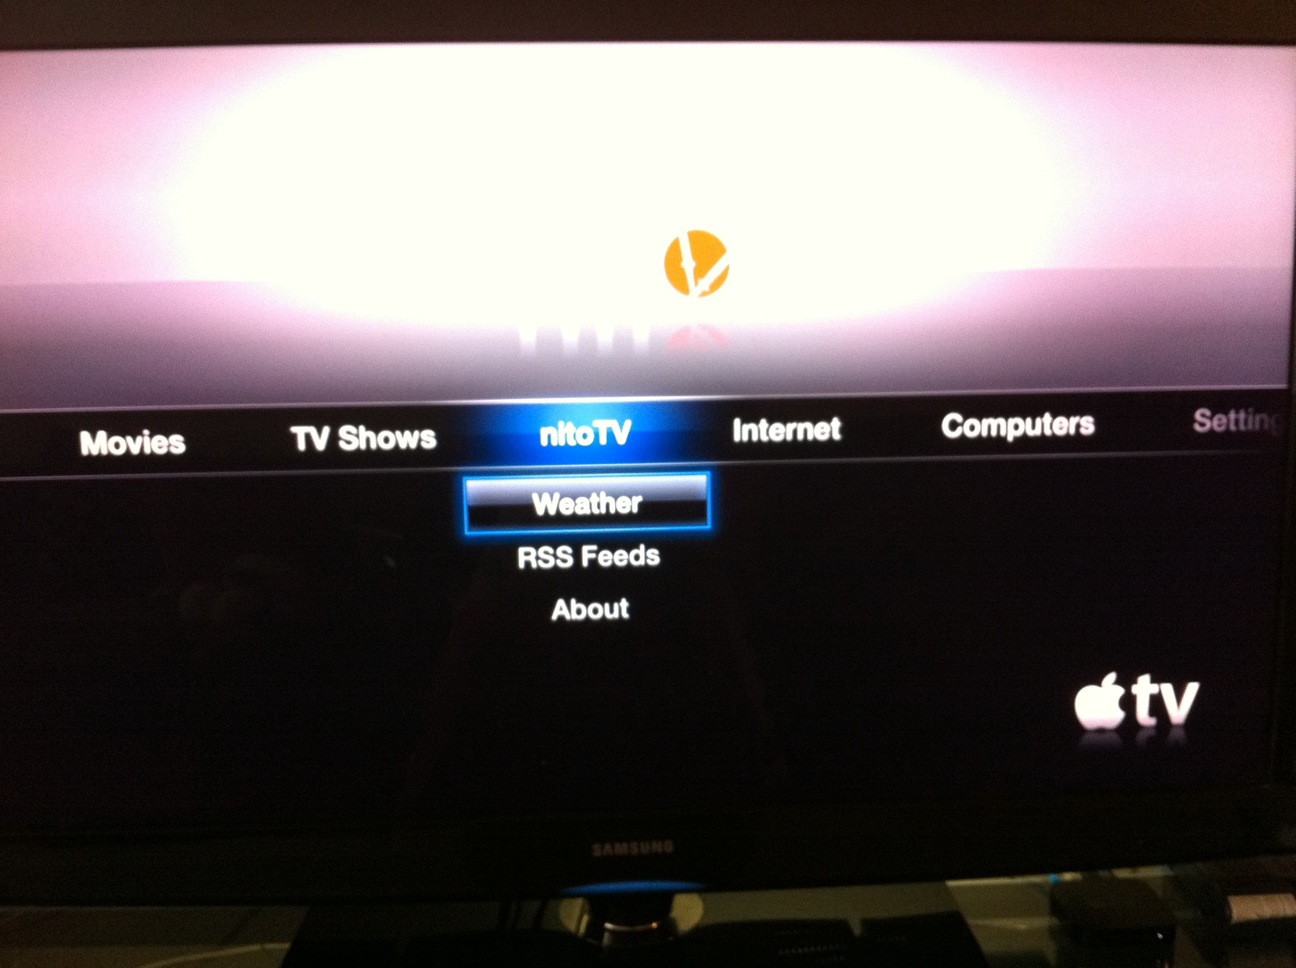 nitoTV + HelloWorld on your (jailbroken) Apple TV2 | Forums